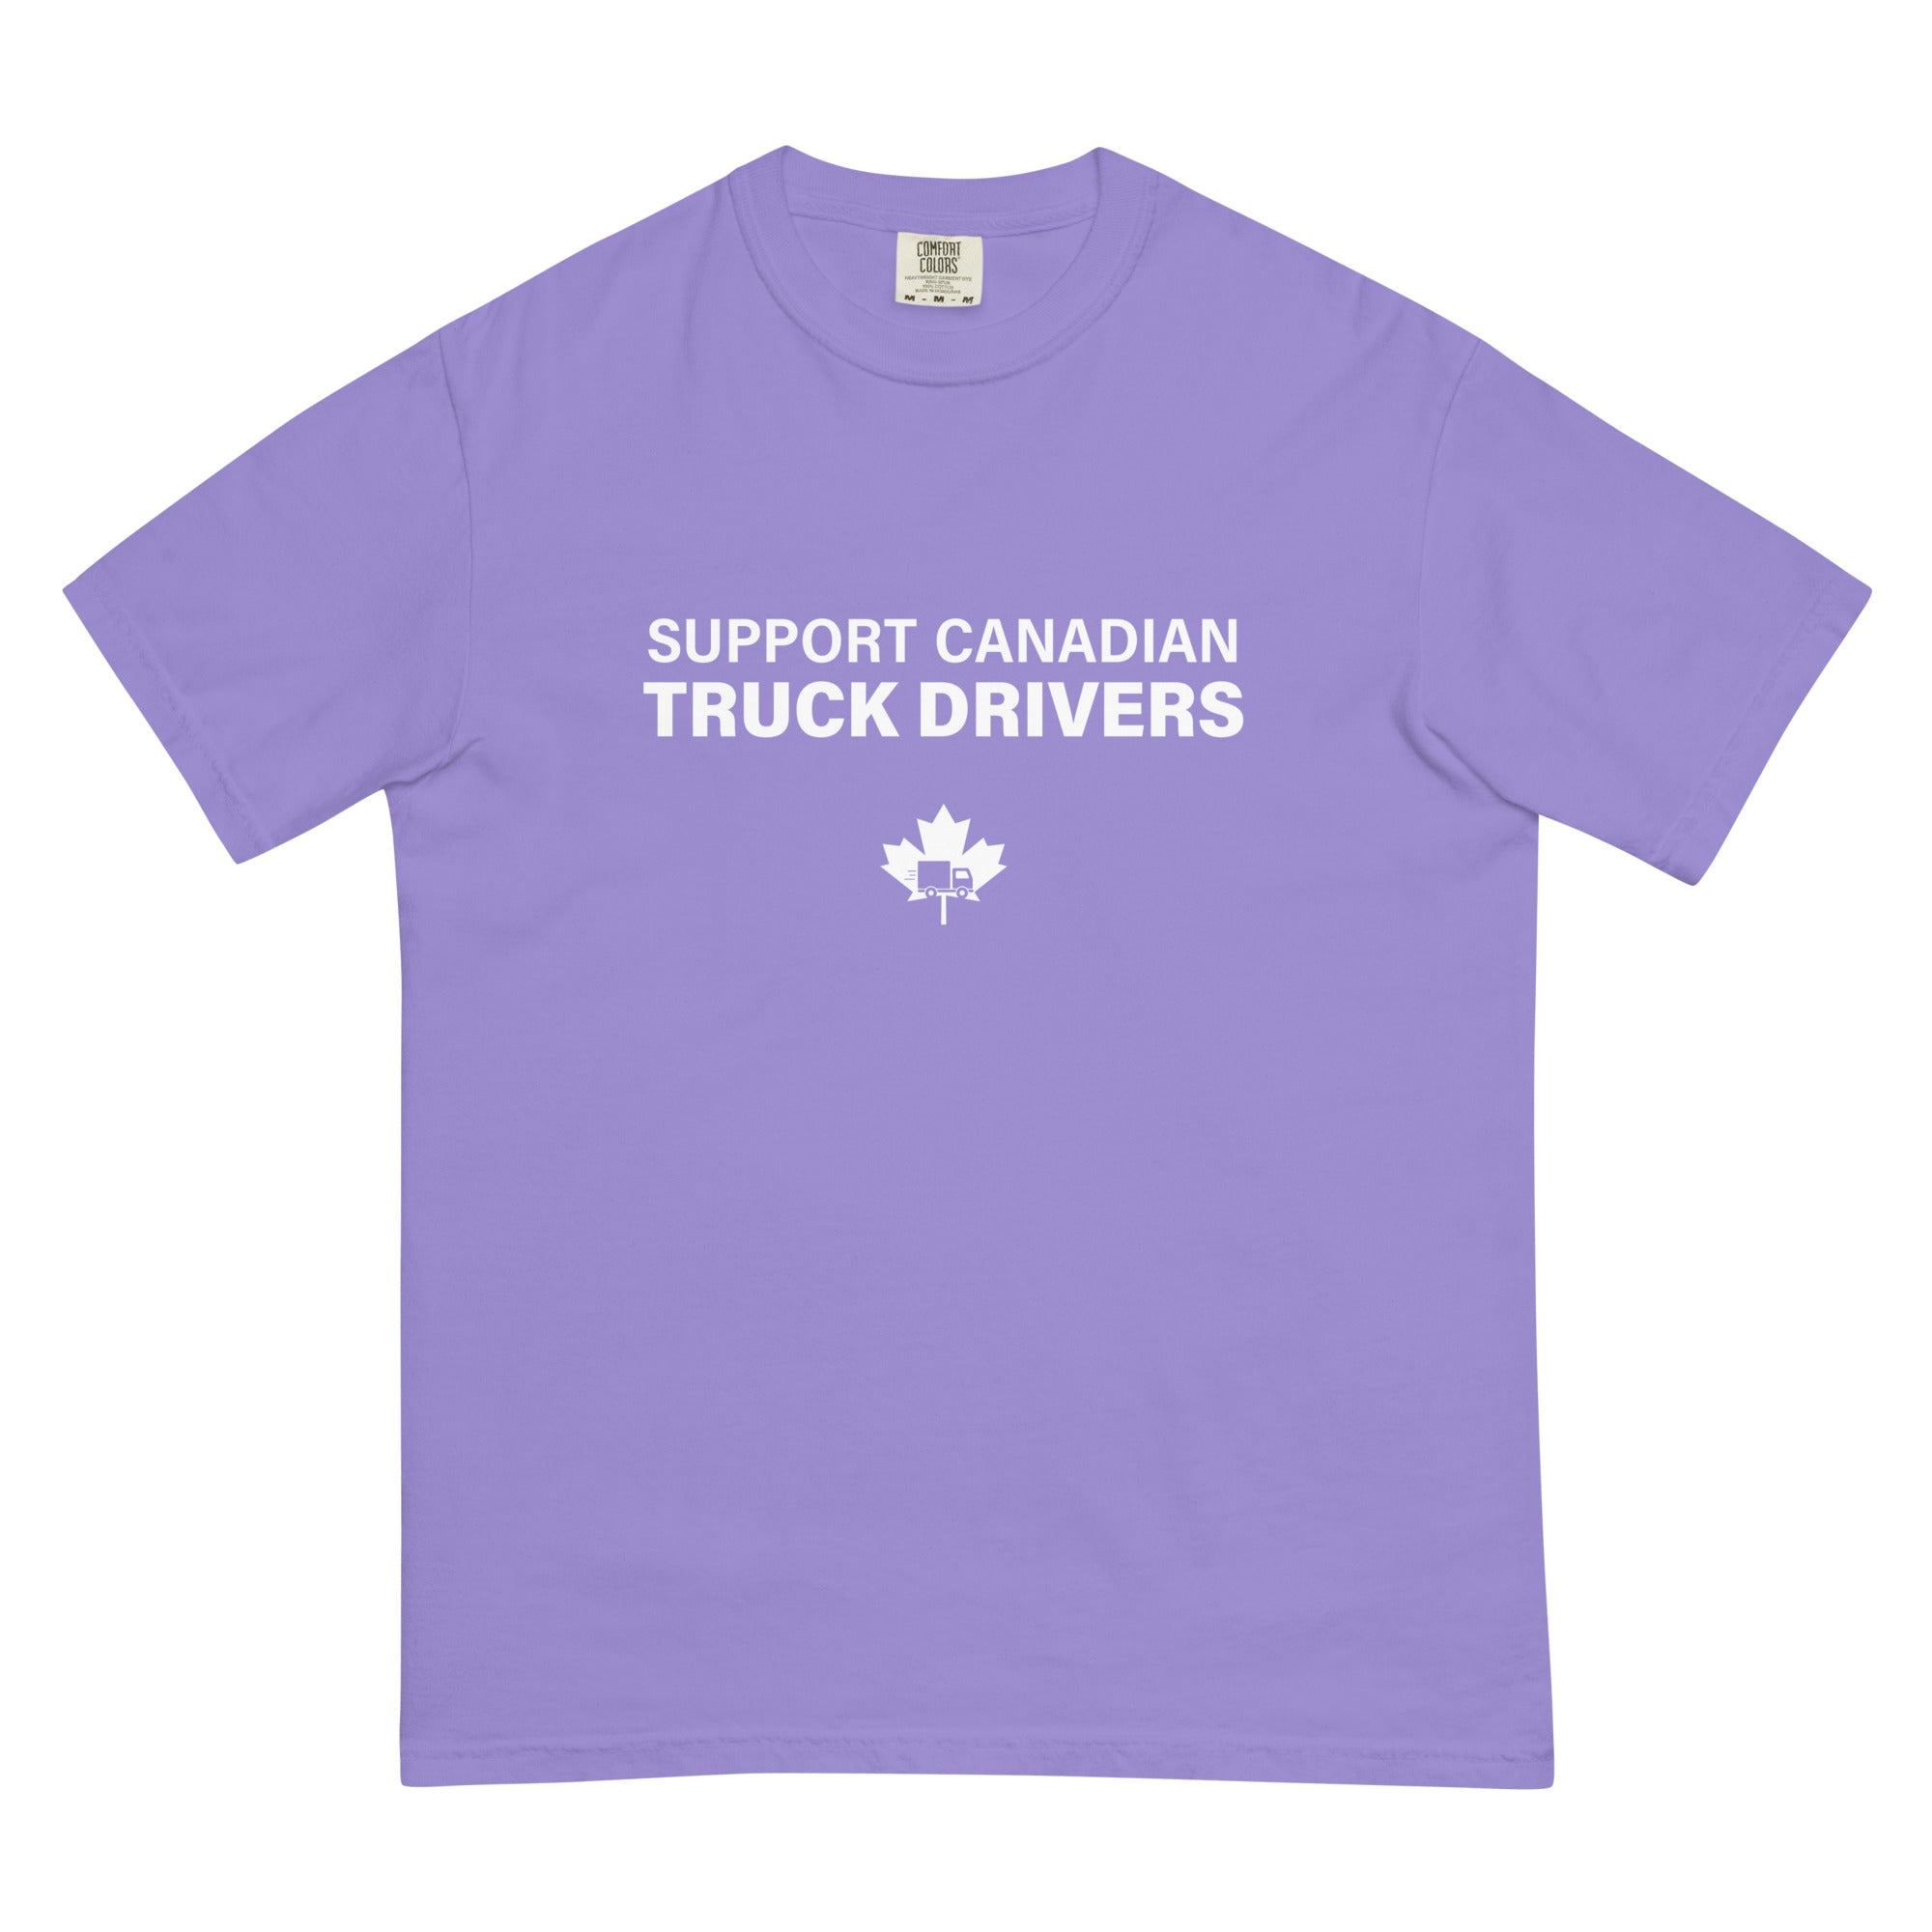 Men's "Support Canadian Truck Drivers" T-shirt